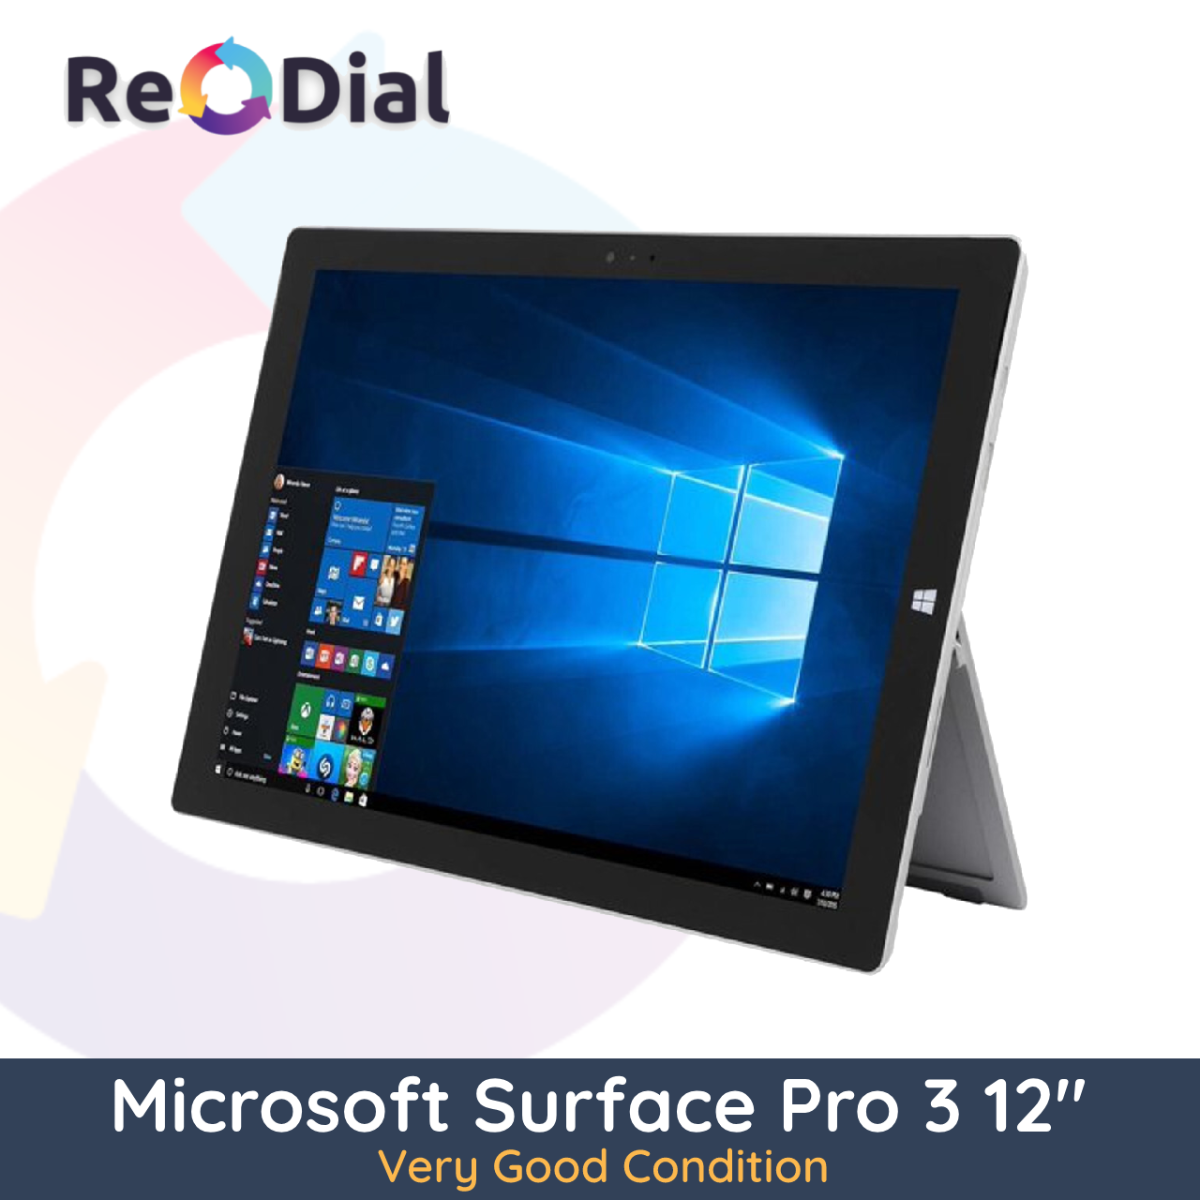 Microsoft Surface Pro 3 12" i5-4300U 256GB 8GB RAM - Very Good Condition